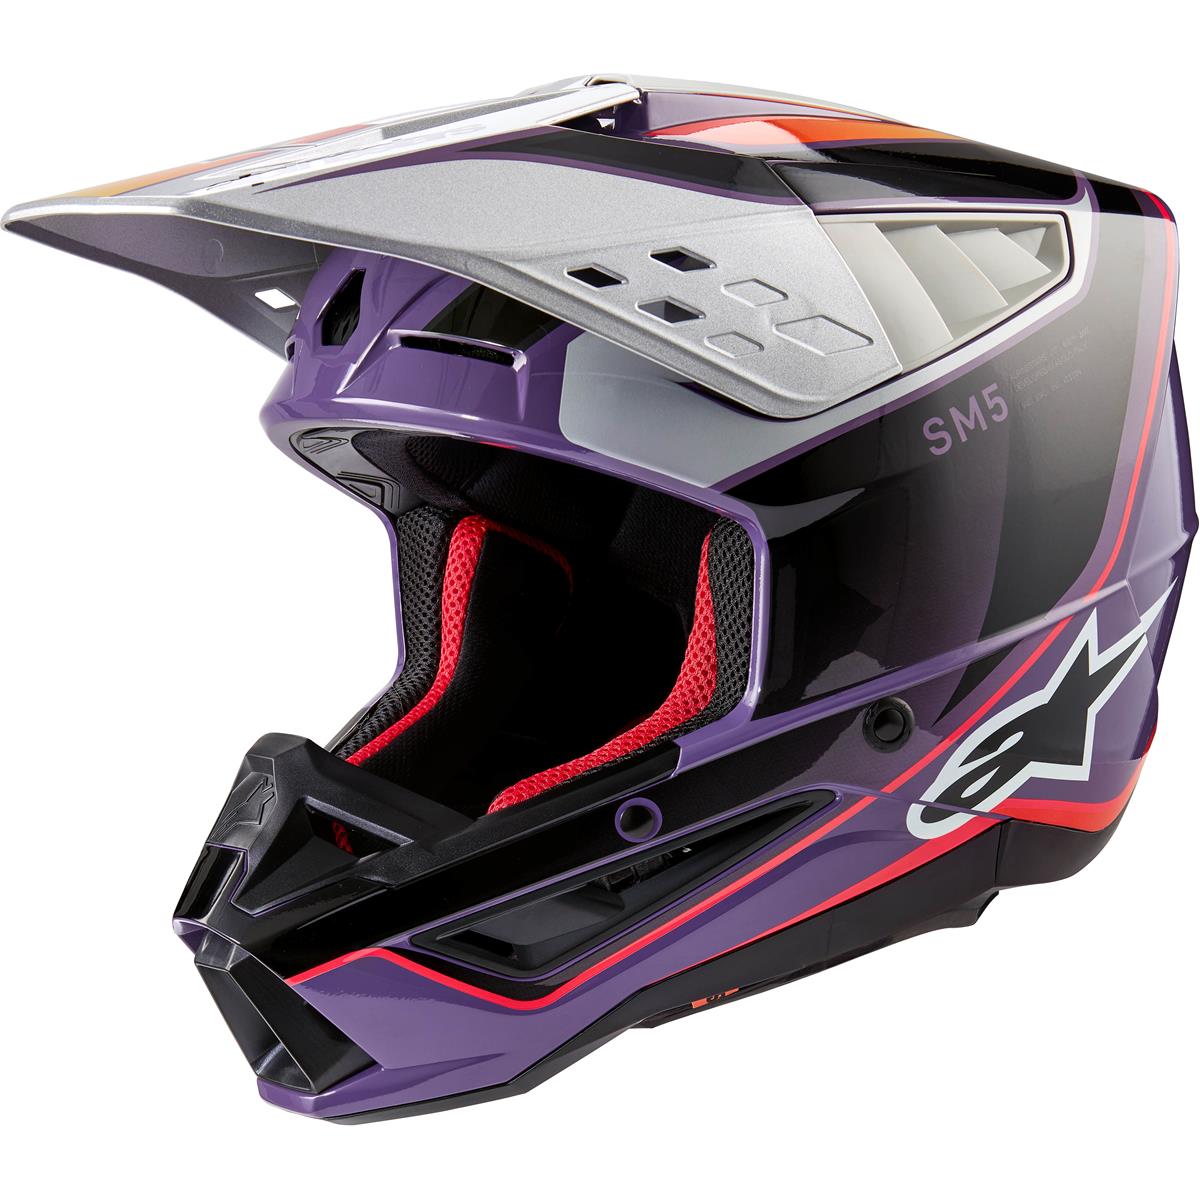 Alpinestars Motocross-Helm S-M5 Sail - Violett/Schwarz/Silber/Glossy